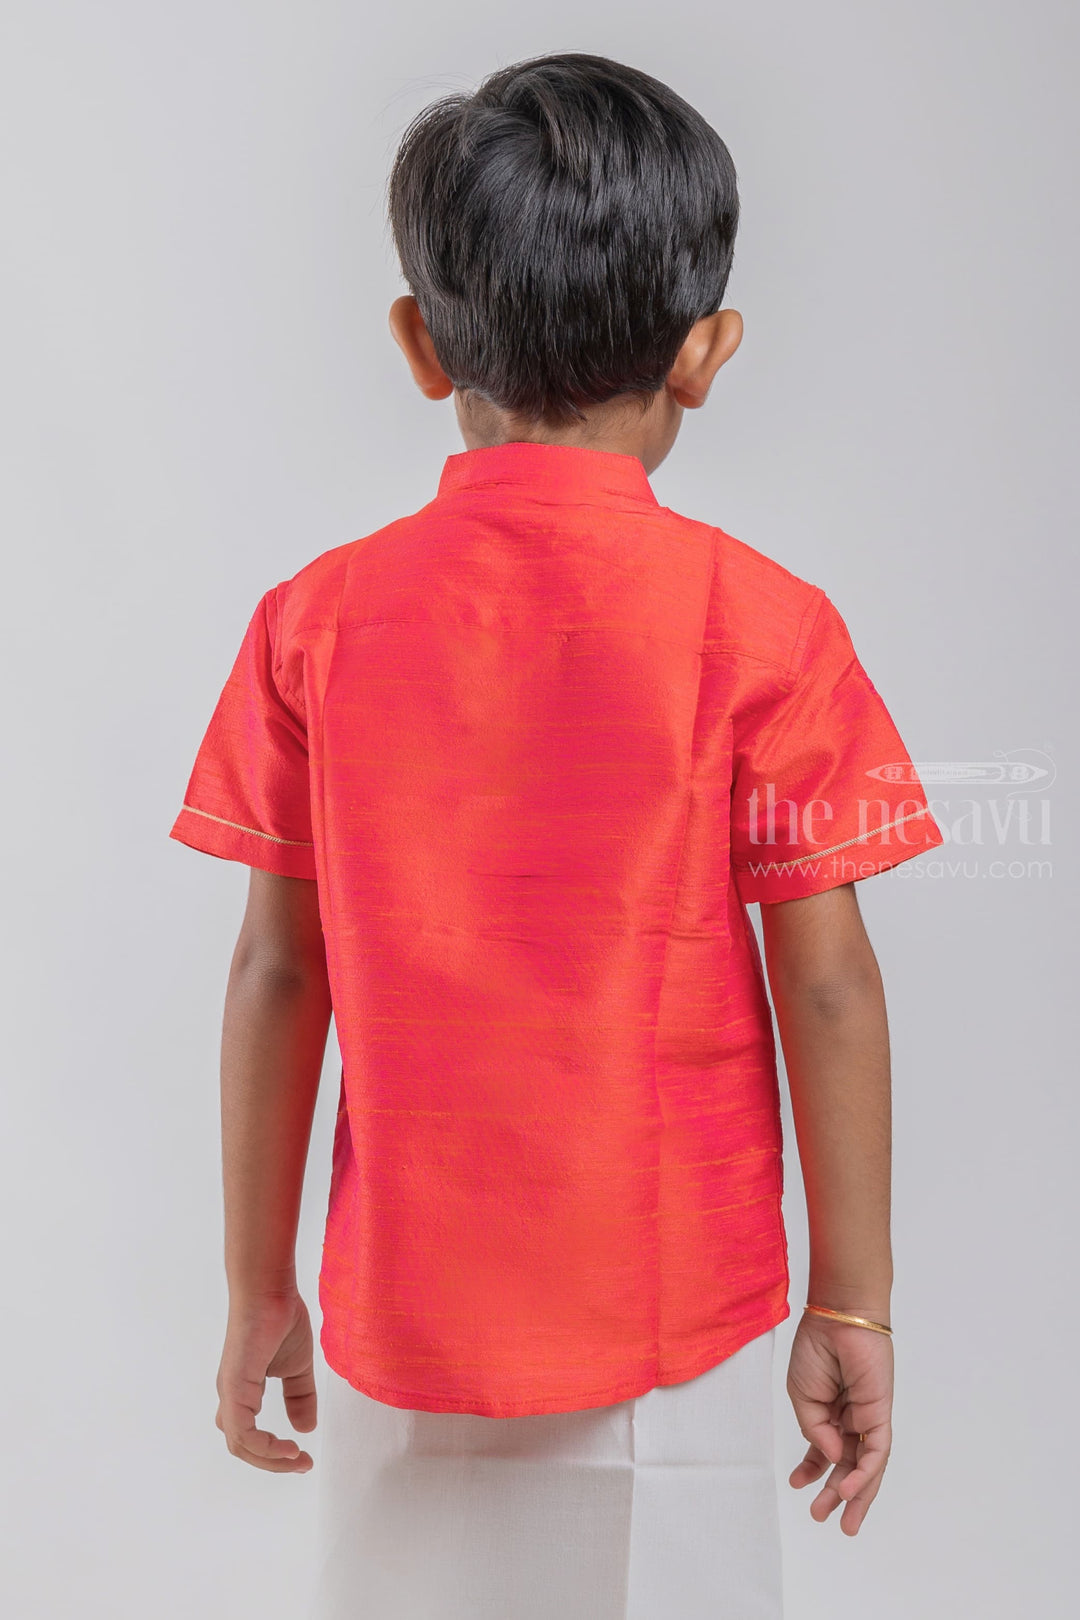 The Nesavu Boys Silk Shirt Royal Peach Traditional Boys Pattu Shirt With Unicorn Embroidery psr silks Nesavu